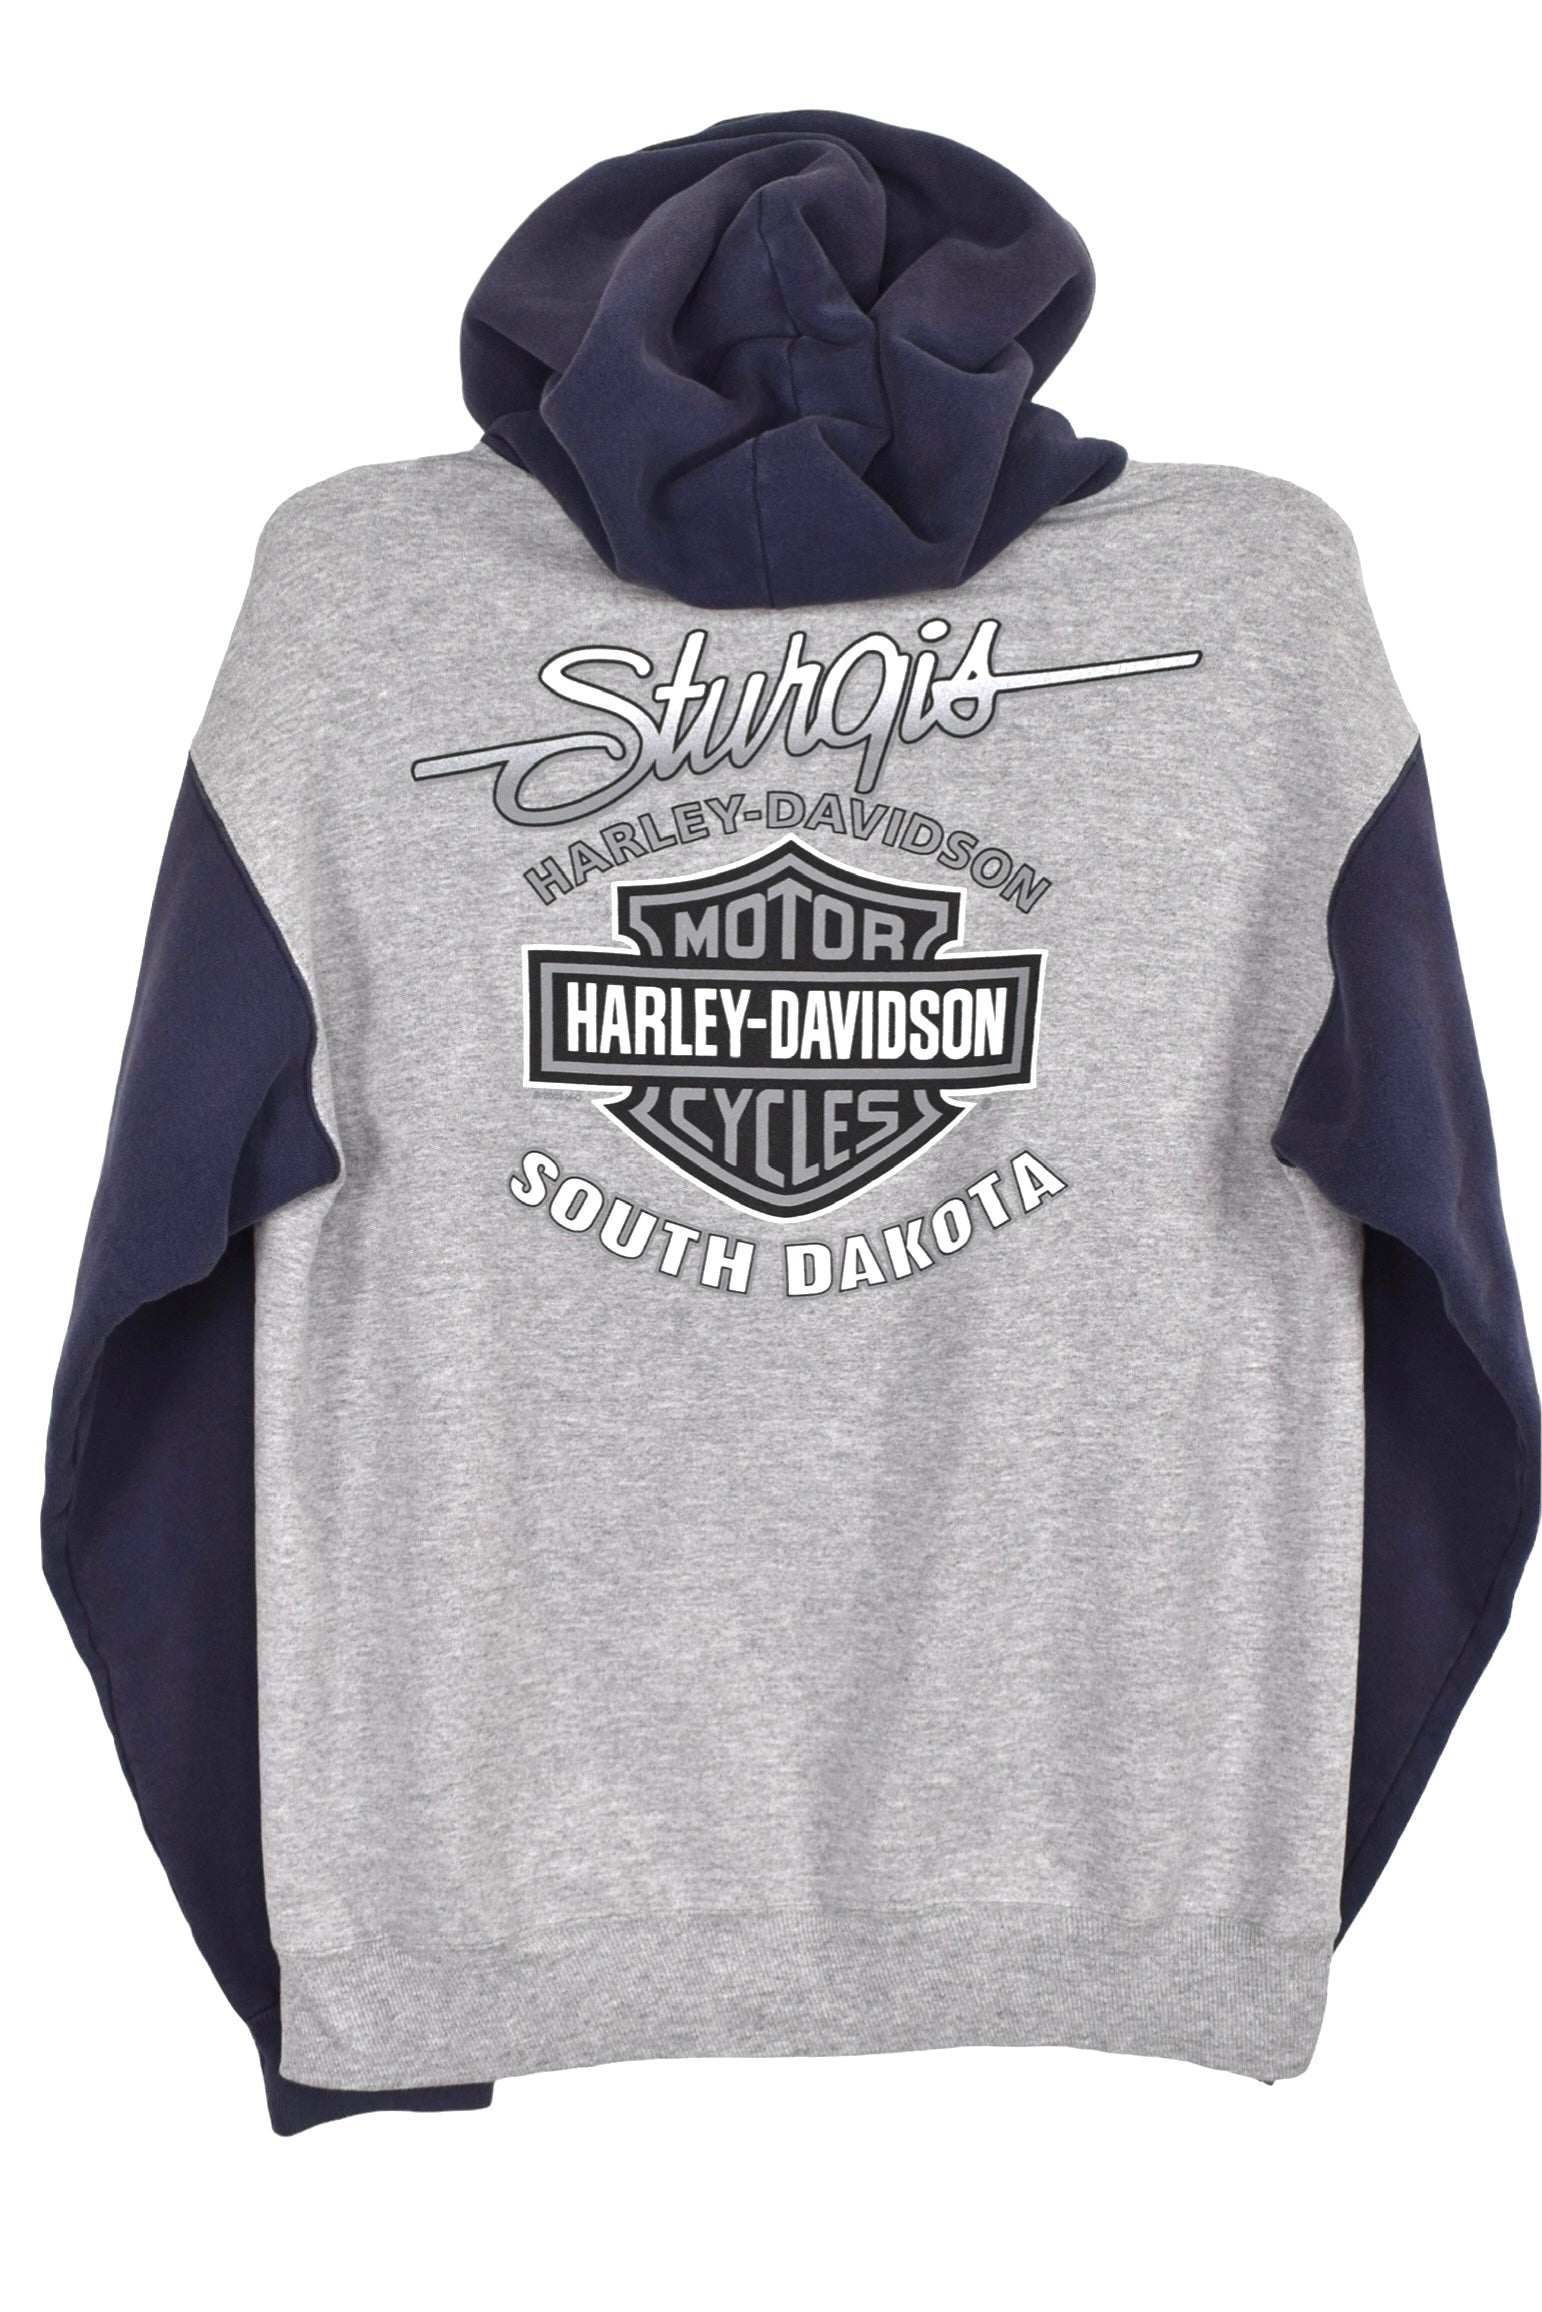 Vintage Harley Davidson hoodie (M), grey graphic sweatshirt